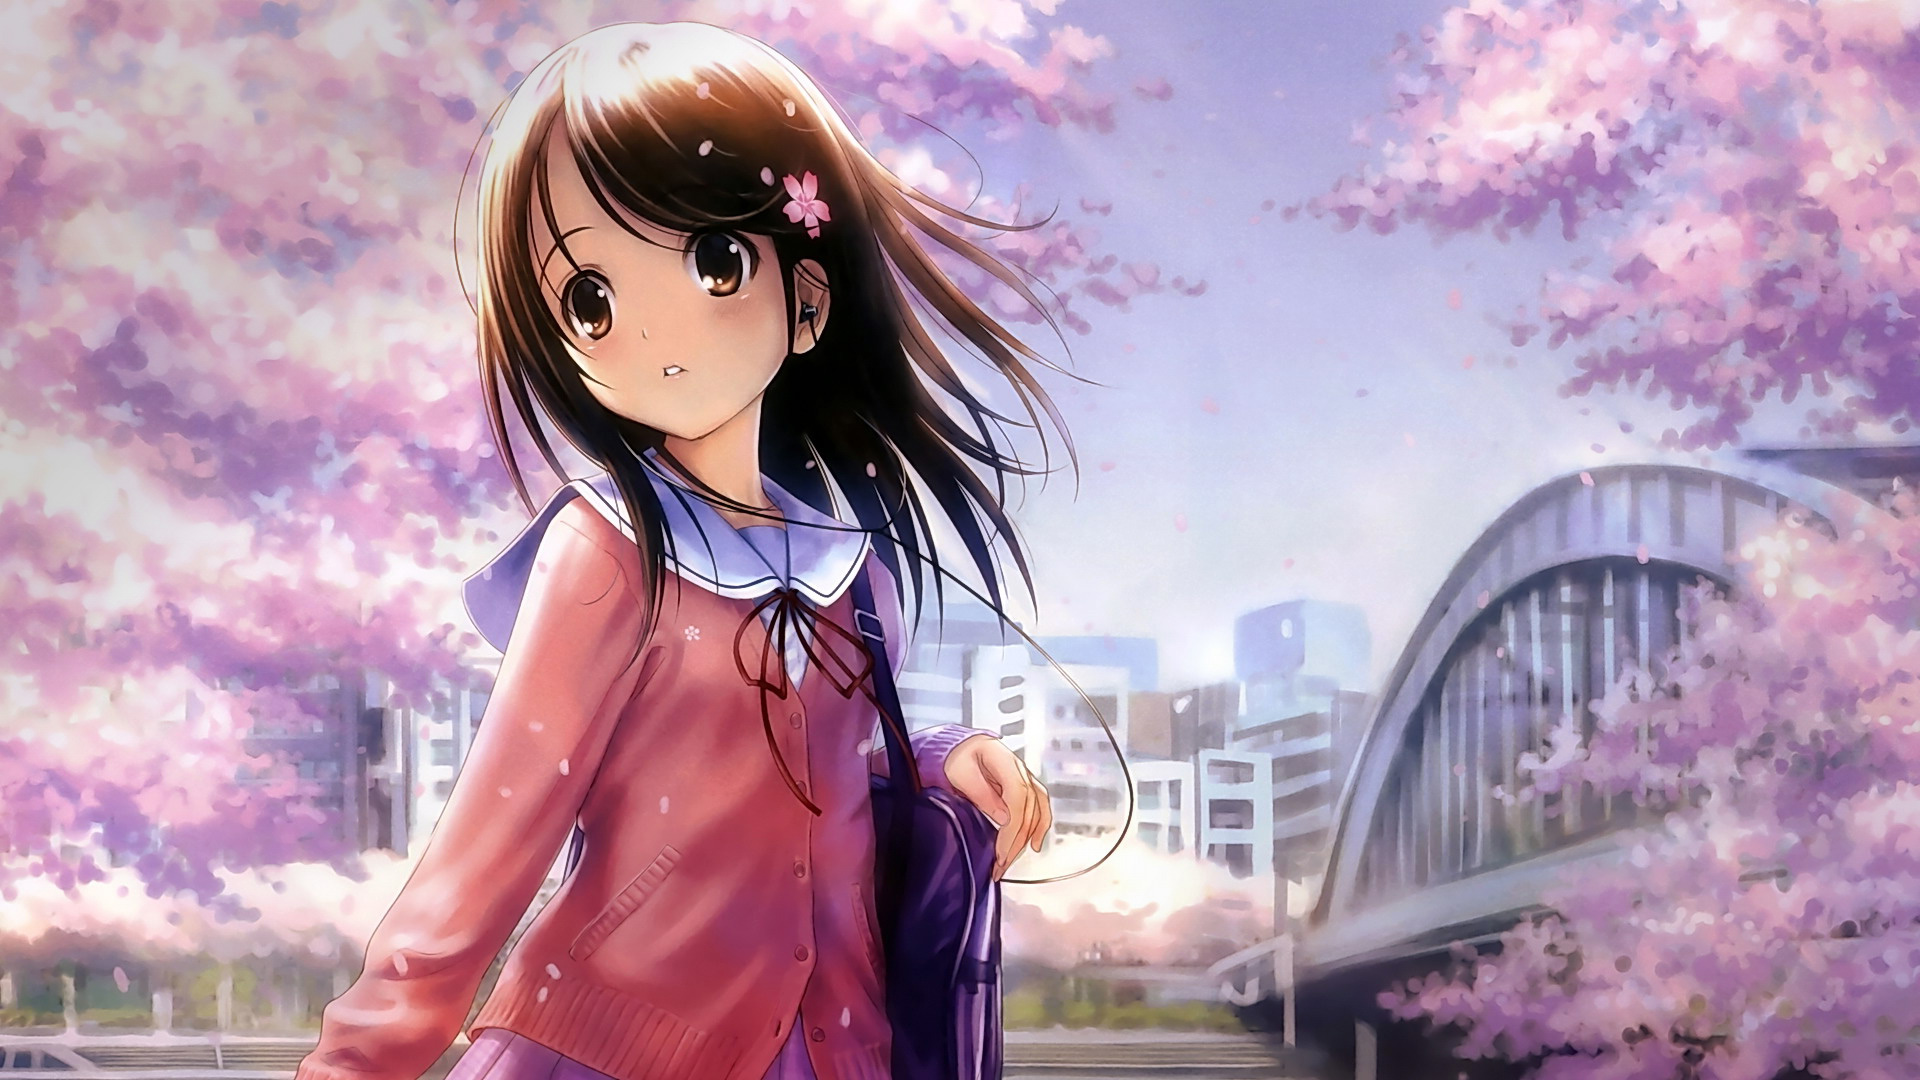 Anime Schoolgirl Full hd wallpaper 1080p pink 1920x1080